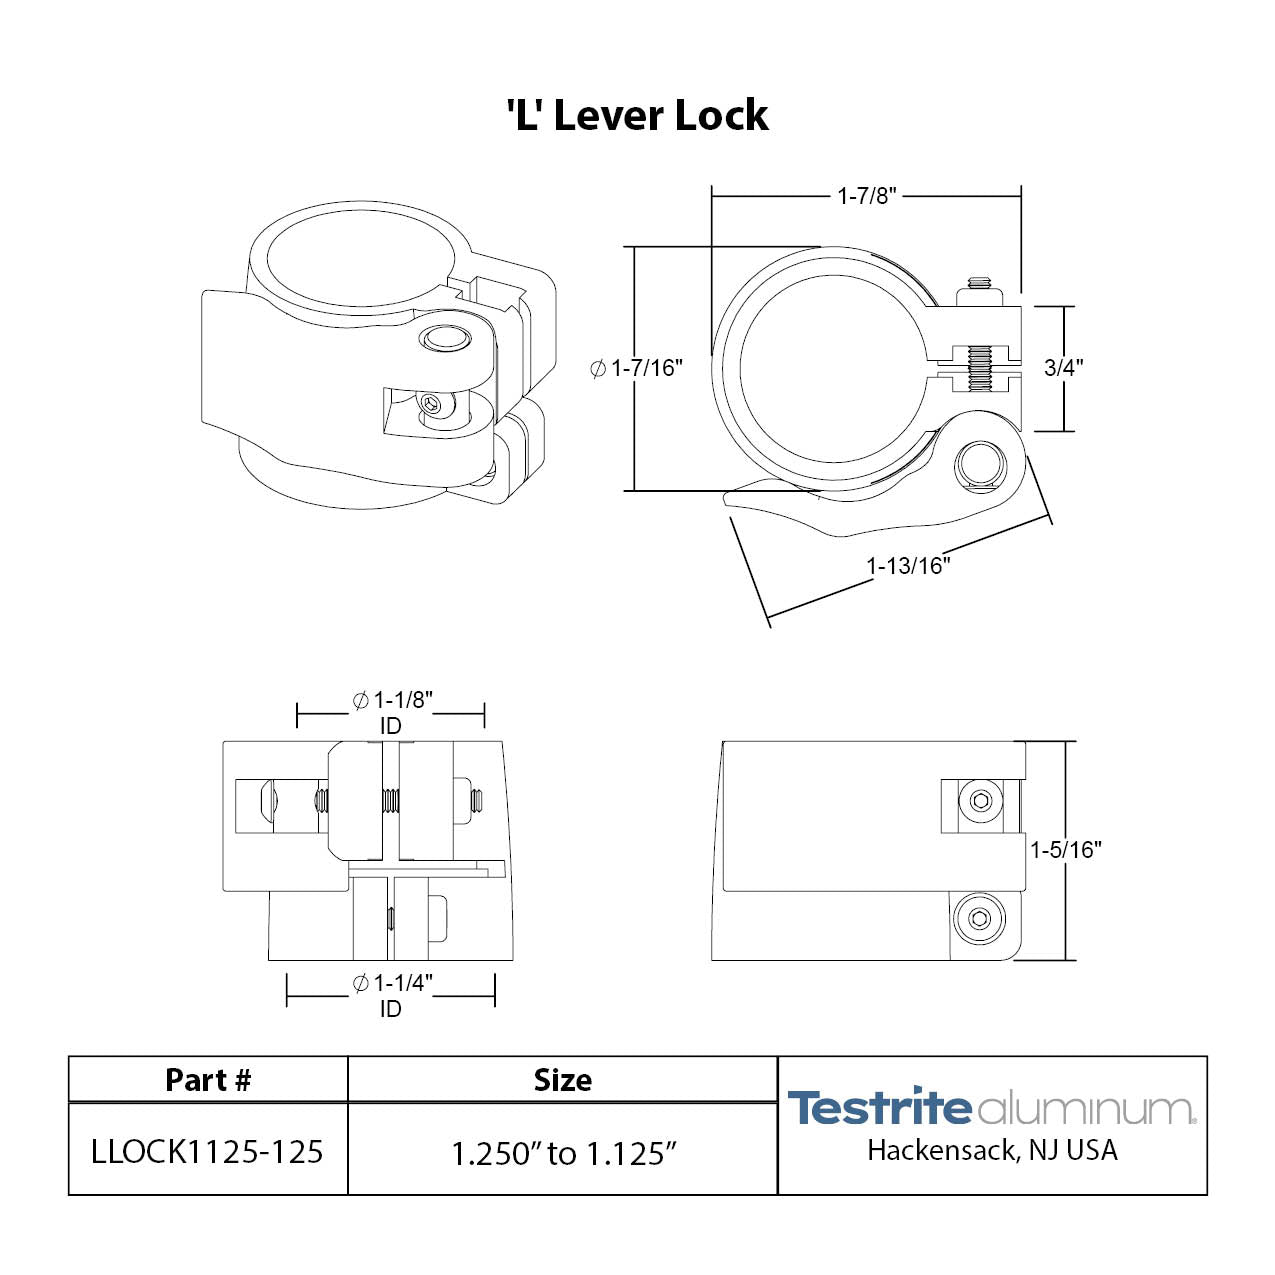 Specification sheet for LLOCK1125-1250